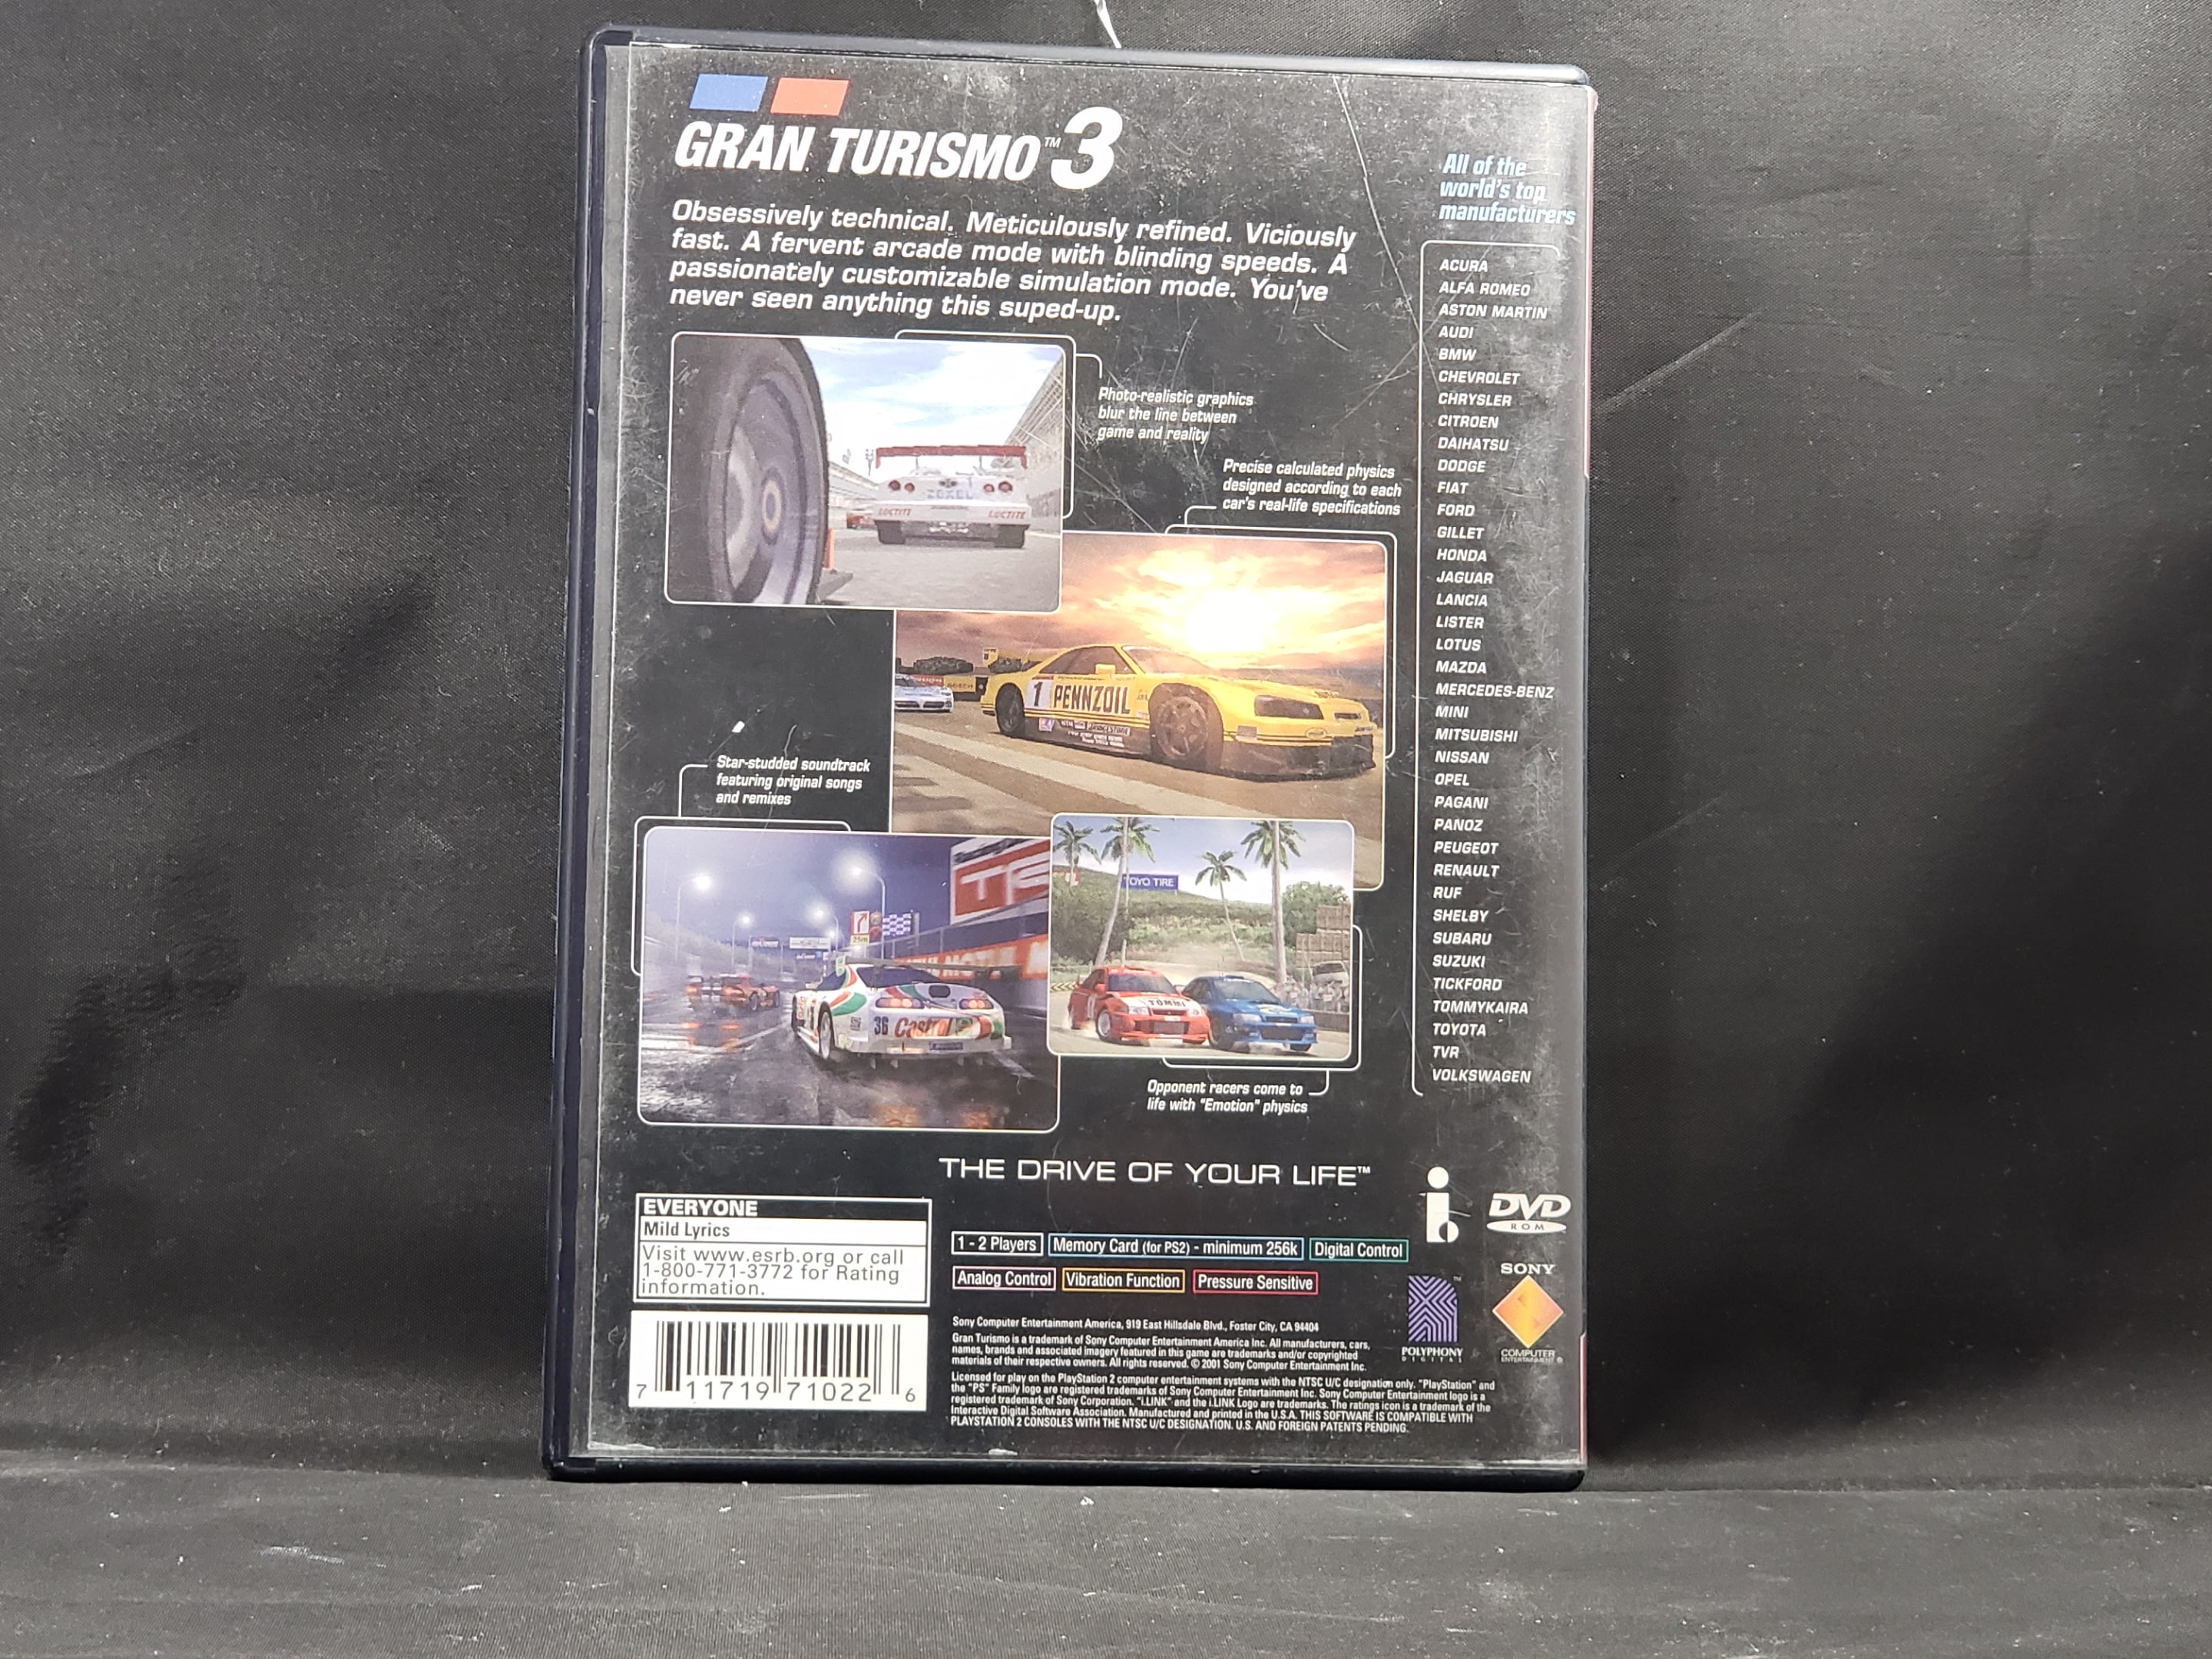 Playstation 2 Gran Turismo 3 A-Spec - Geek-Is-Us